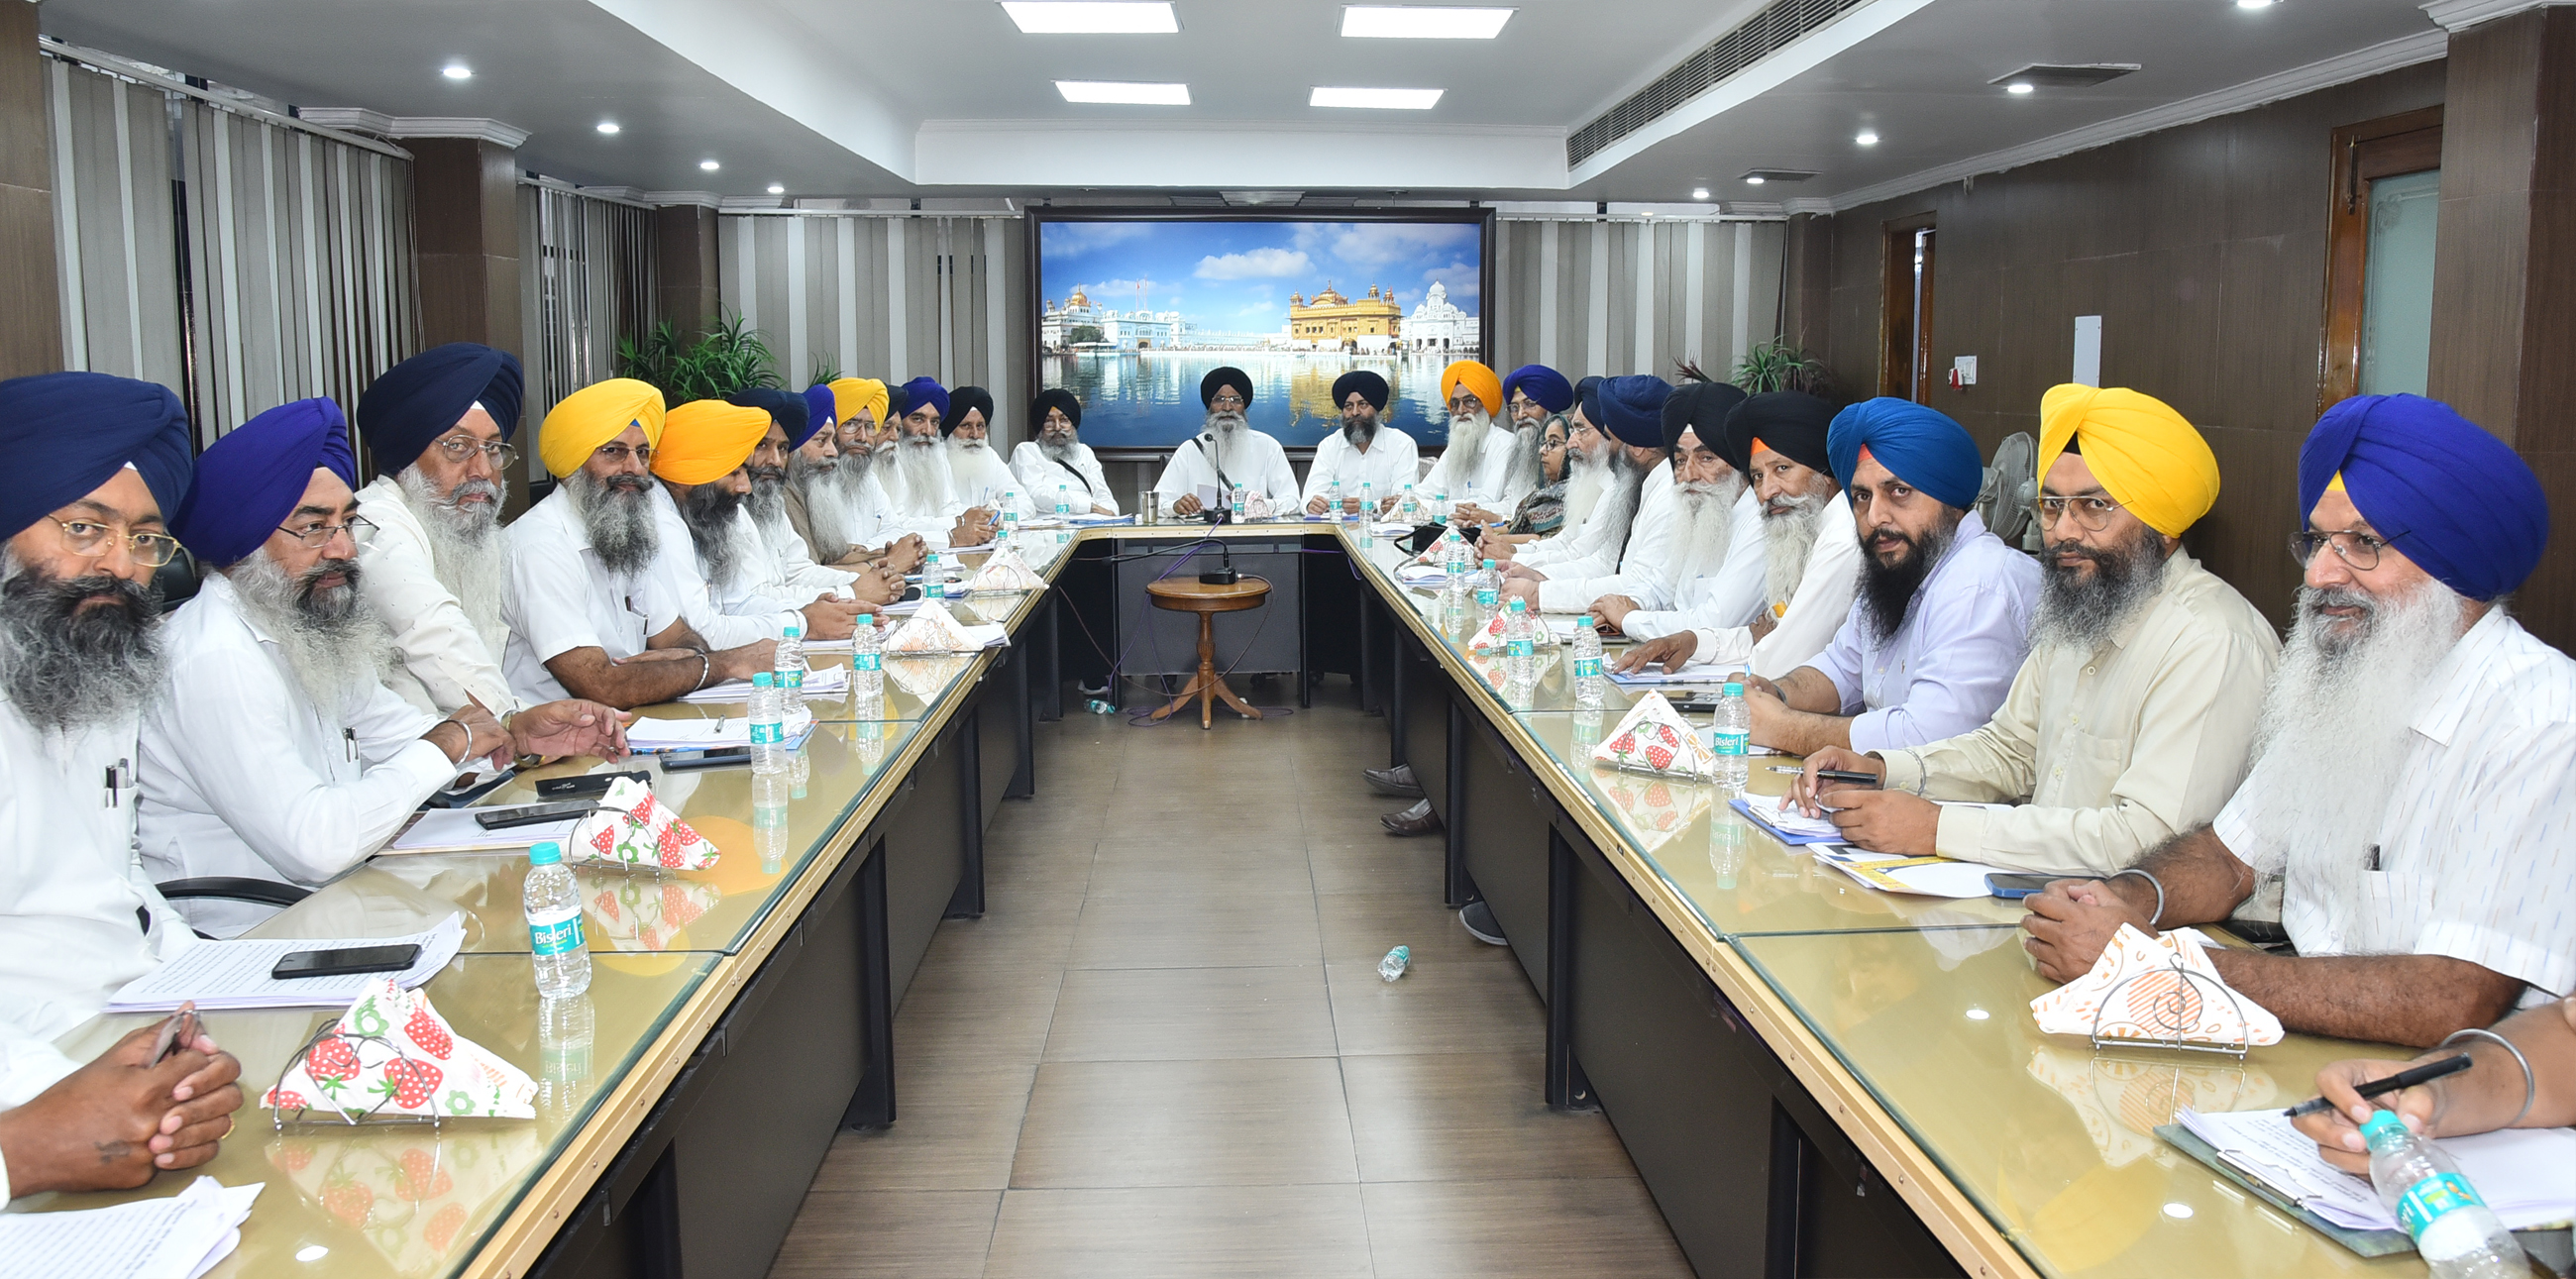 SGPC to established International Sikh Advisory Board: Advocate Dhami